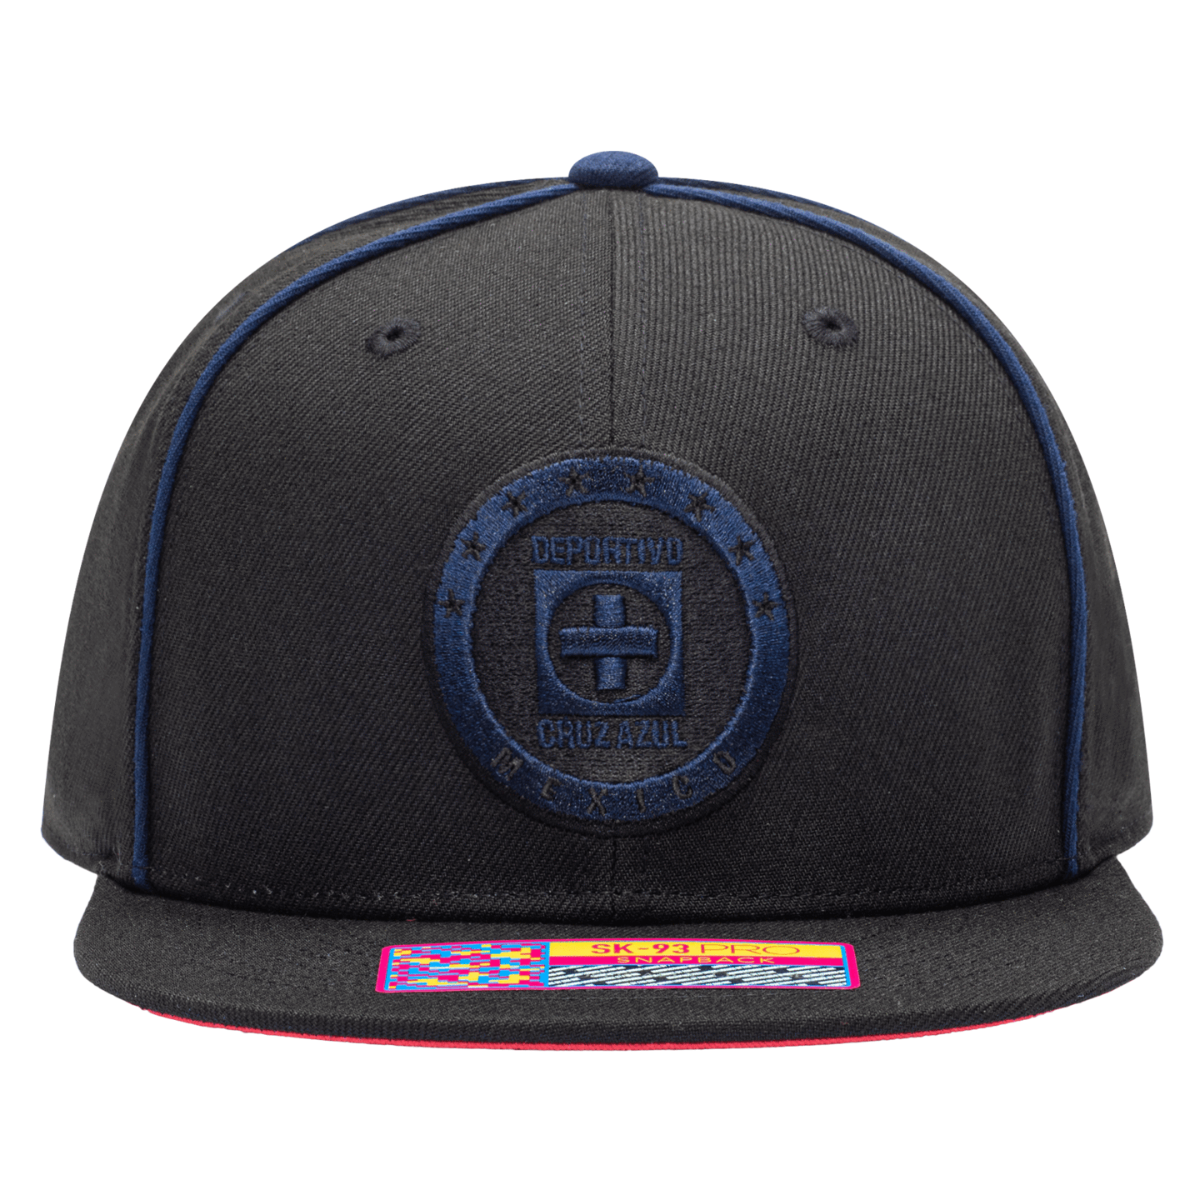 FI Collection Cruz Azul Cali Night Snapback Hat - Black-Blue (Front)